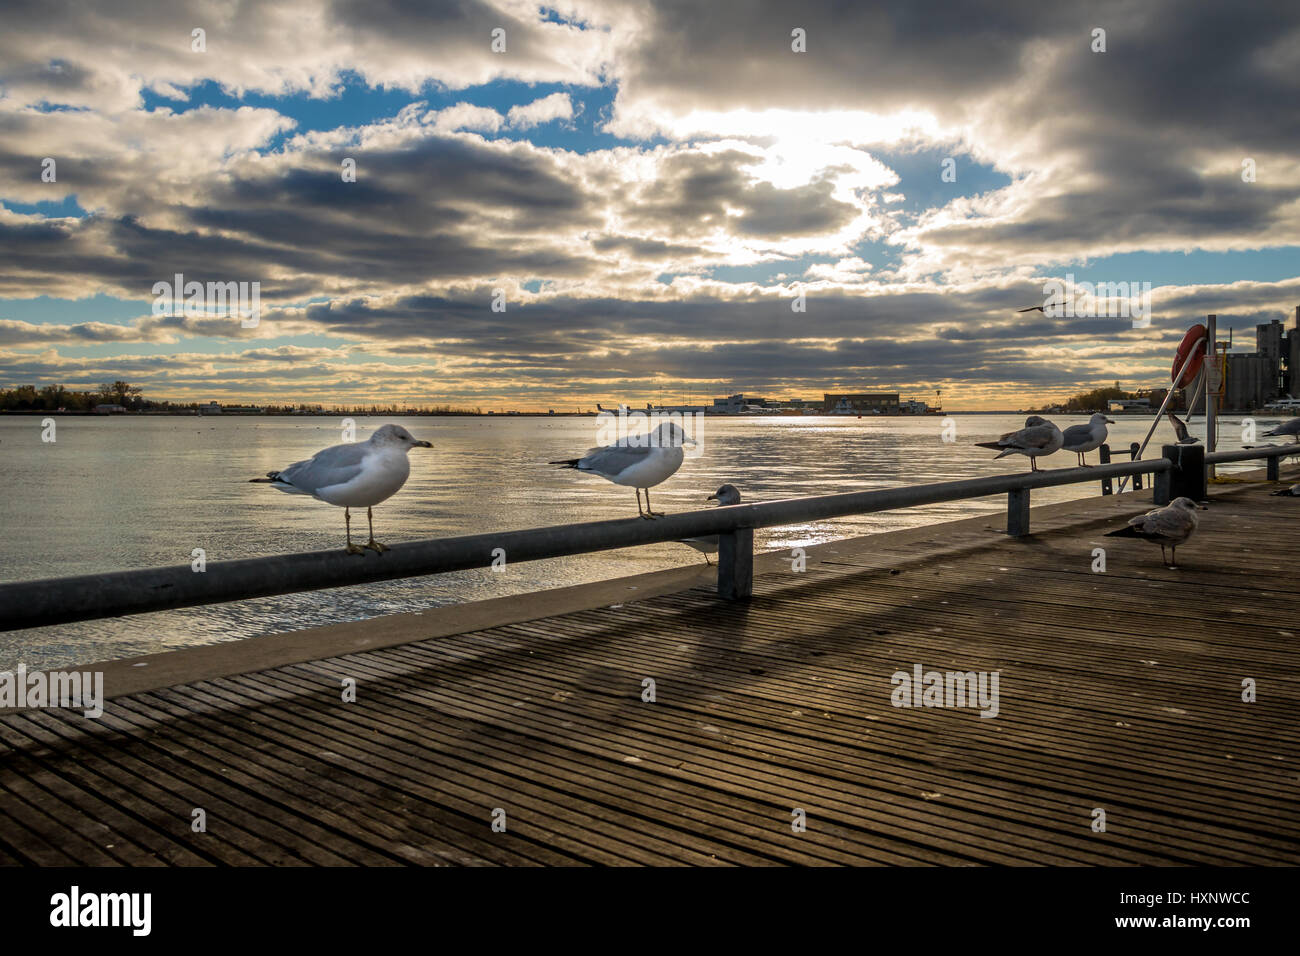 Seagulls on Harbourfront - Toronto, Ontario, Canada Stock Photo